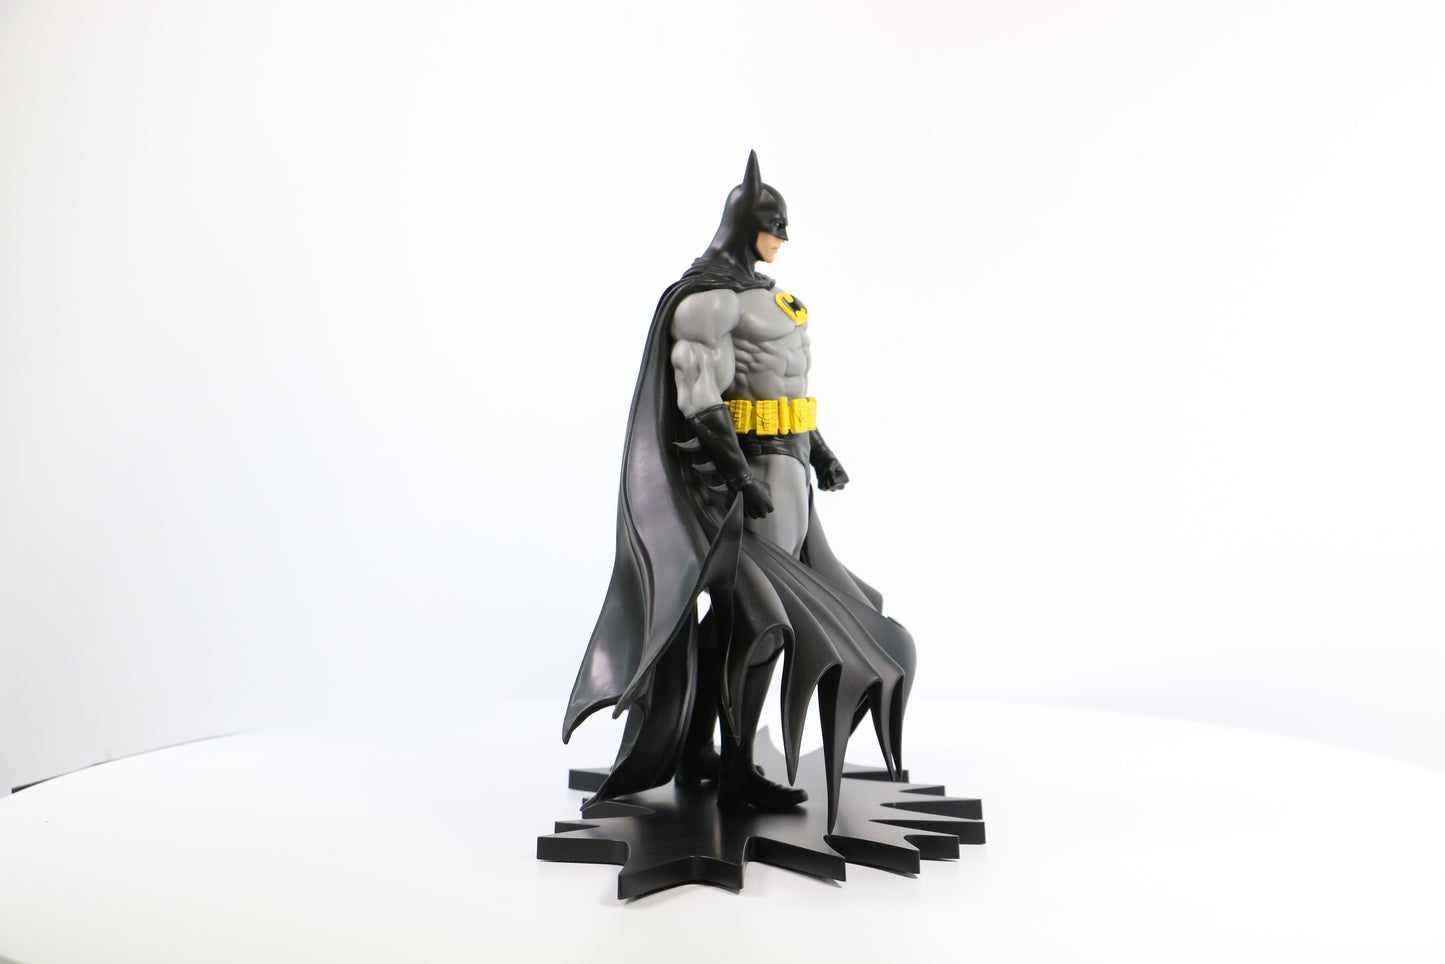 DC Heroes Batman Black Previews Exclusive Statue